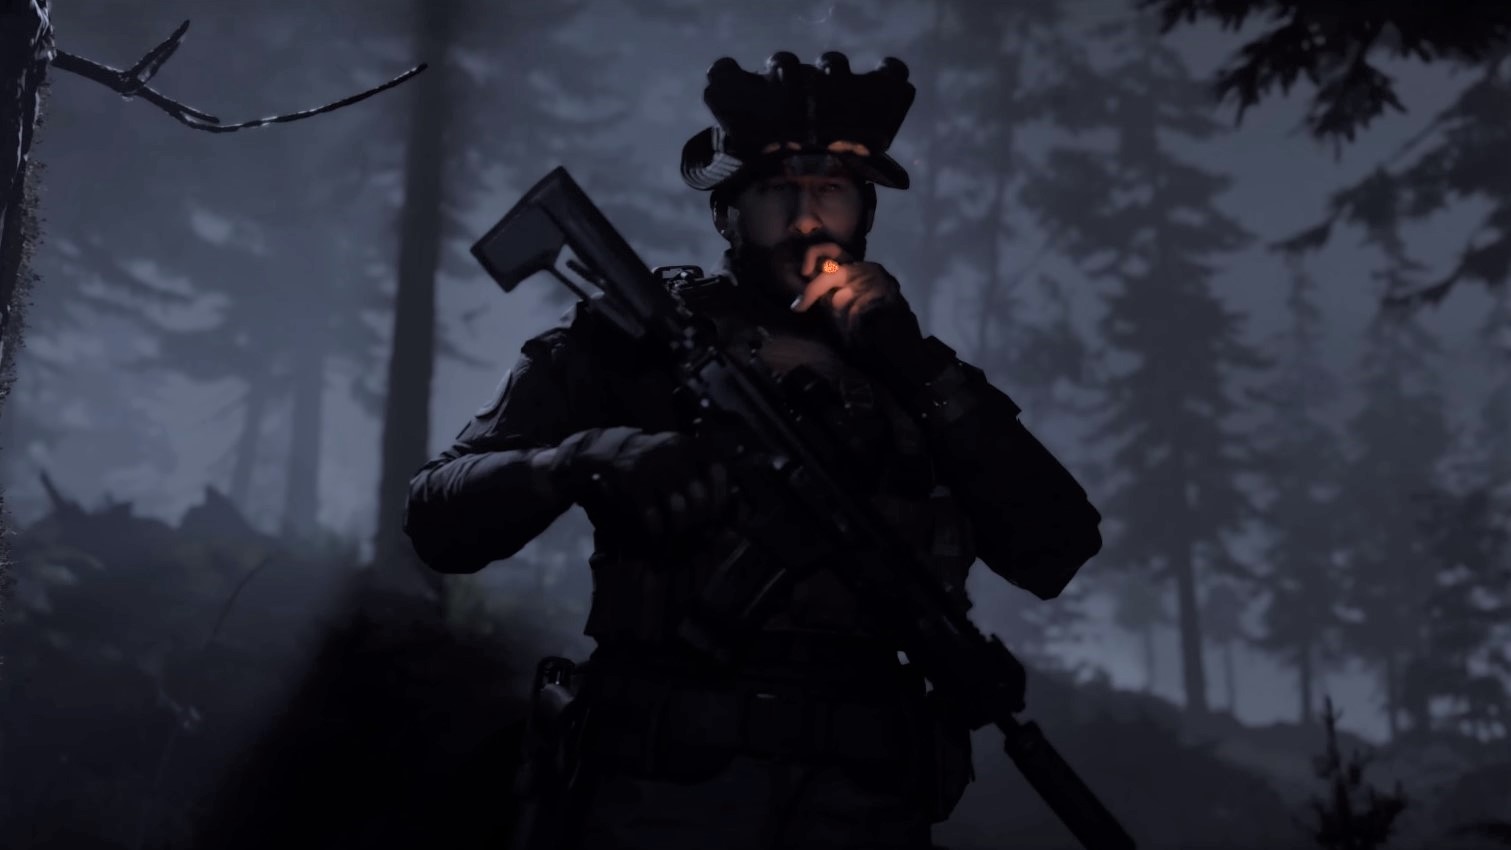 Pin by Yuvinem on Call of Duty MW (2019)  Modern warfare, Call of duty,  Call of duty black